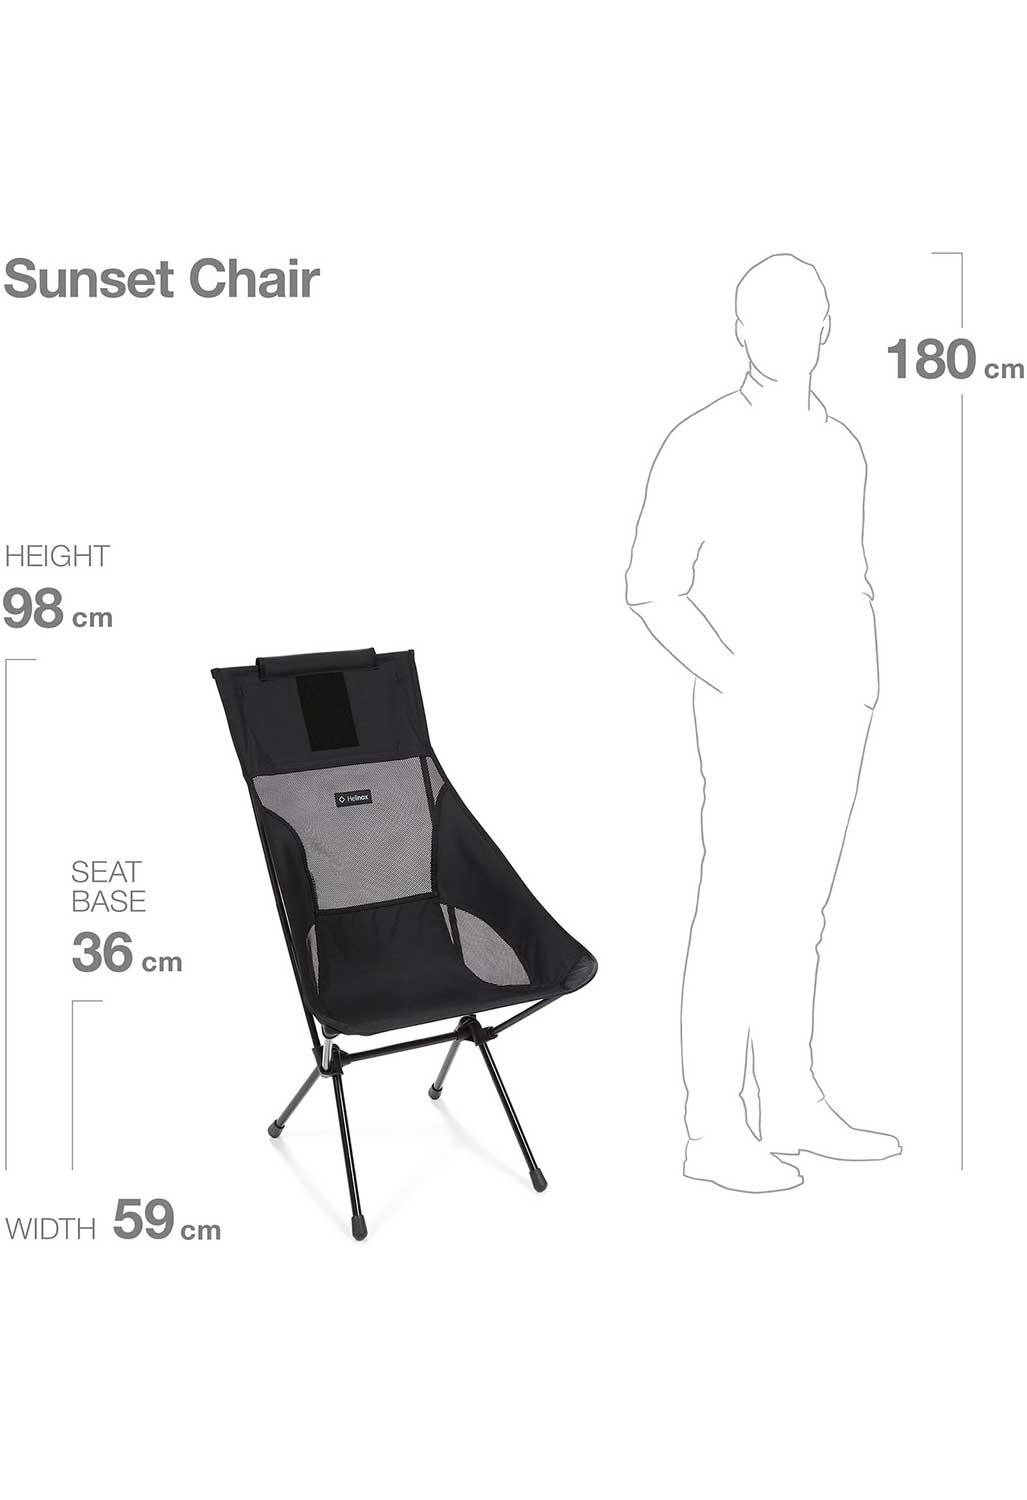 Helinox Sunset Chair - All Black